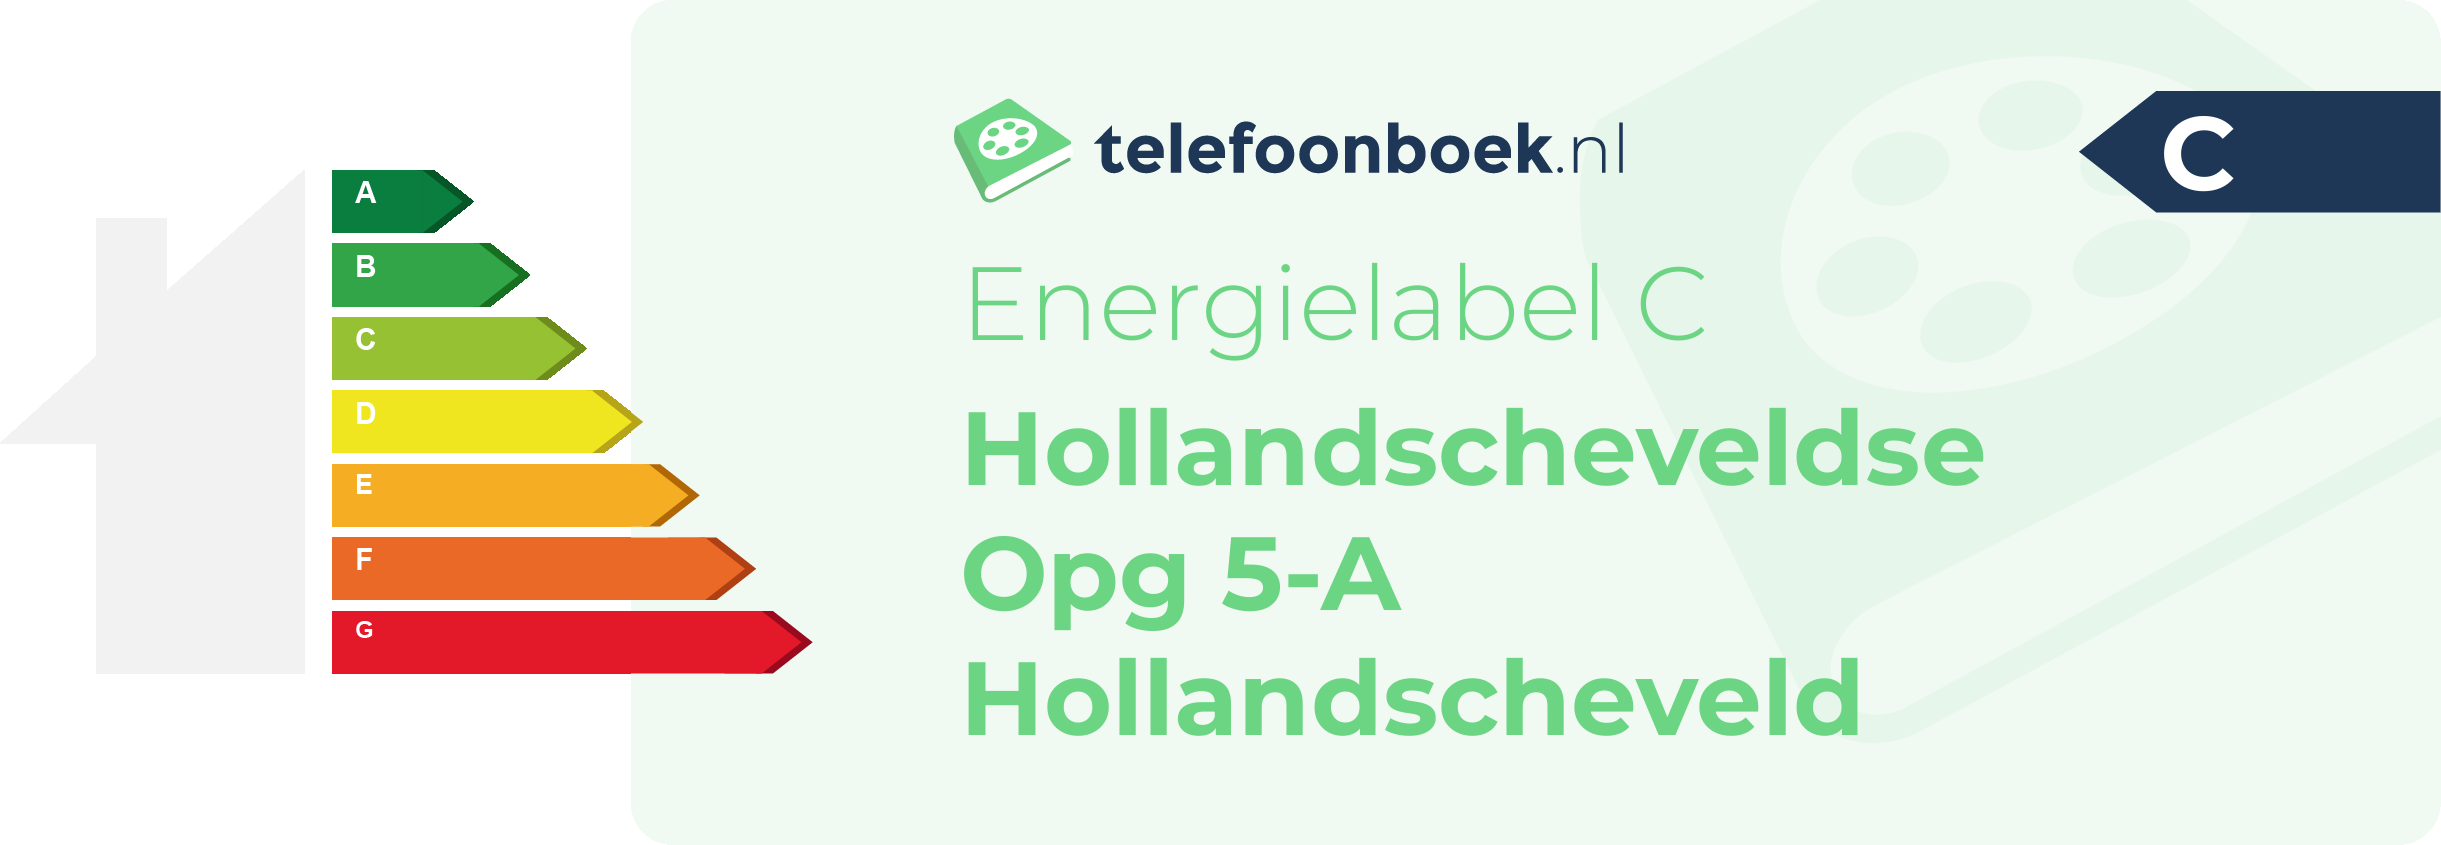 Energielabel Hollandscheveldse Opg 5-A Hollandscheveld